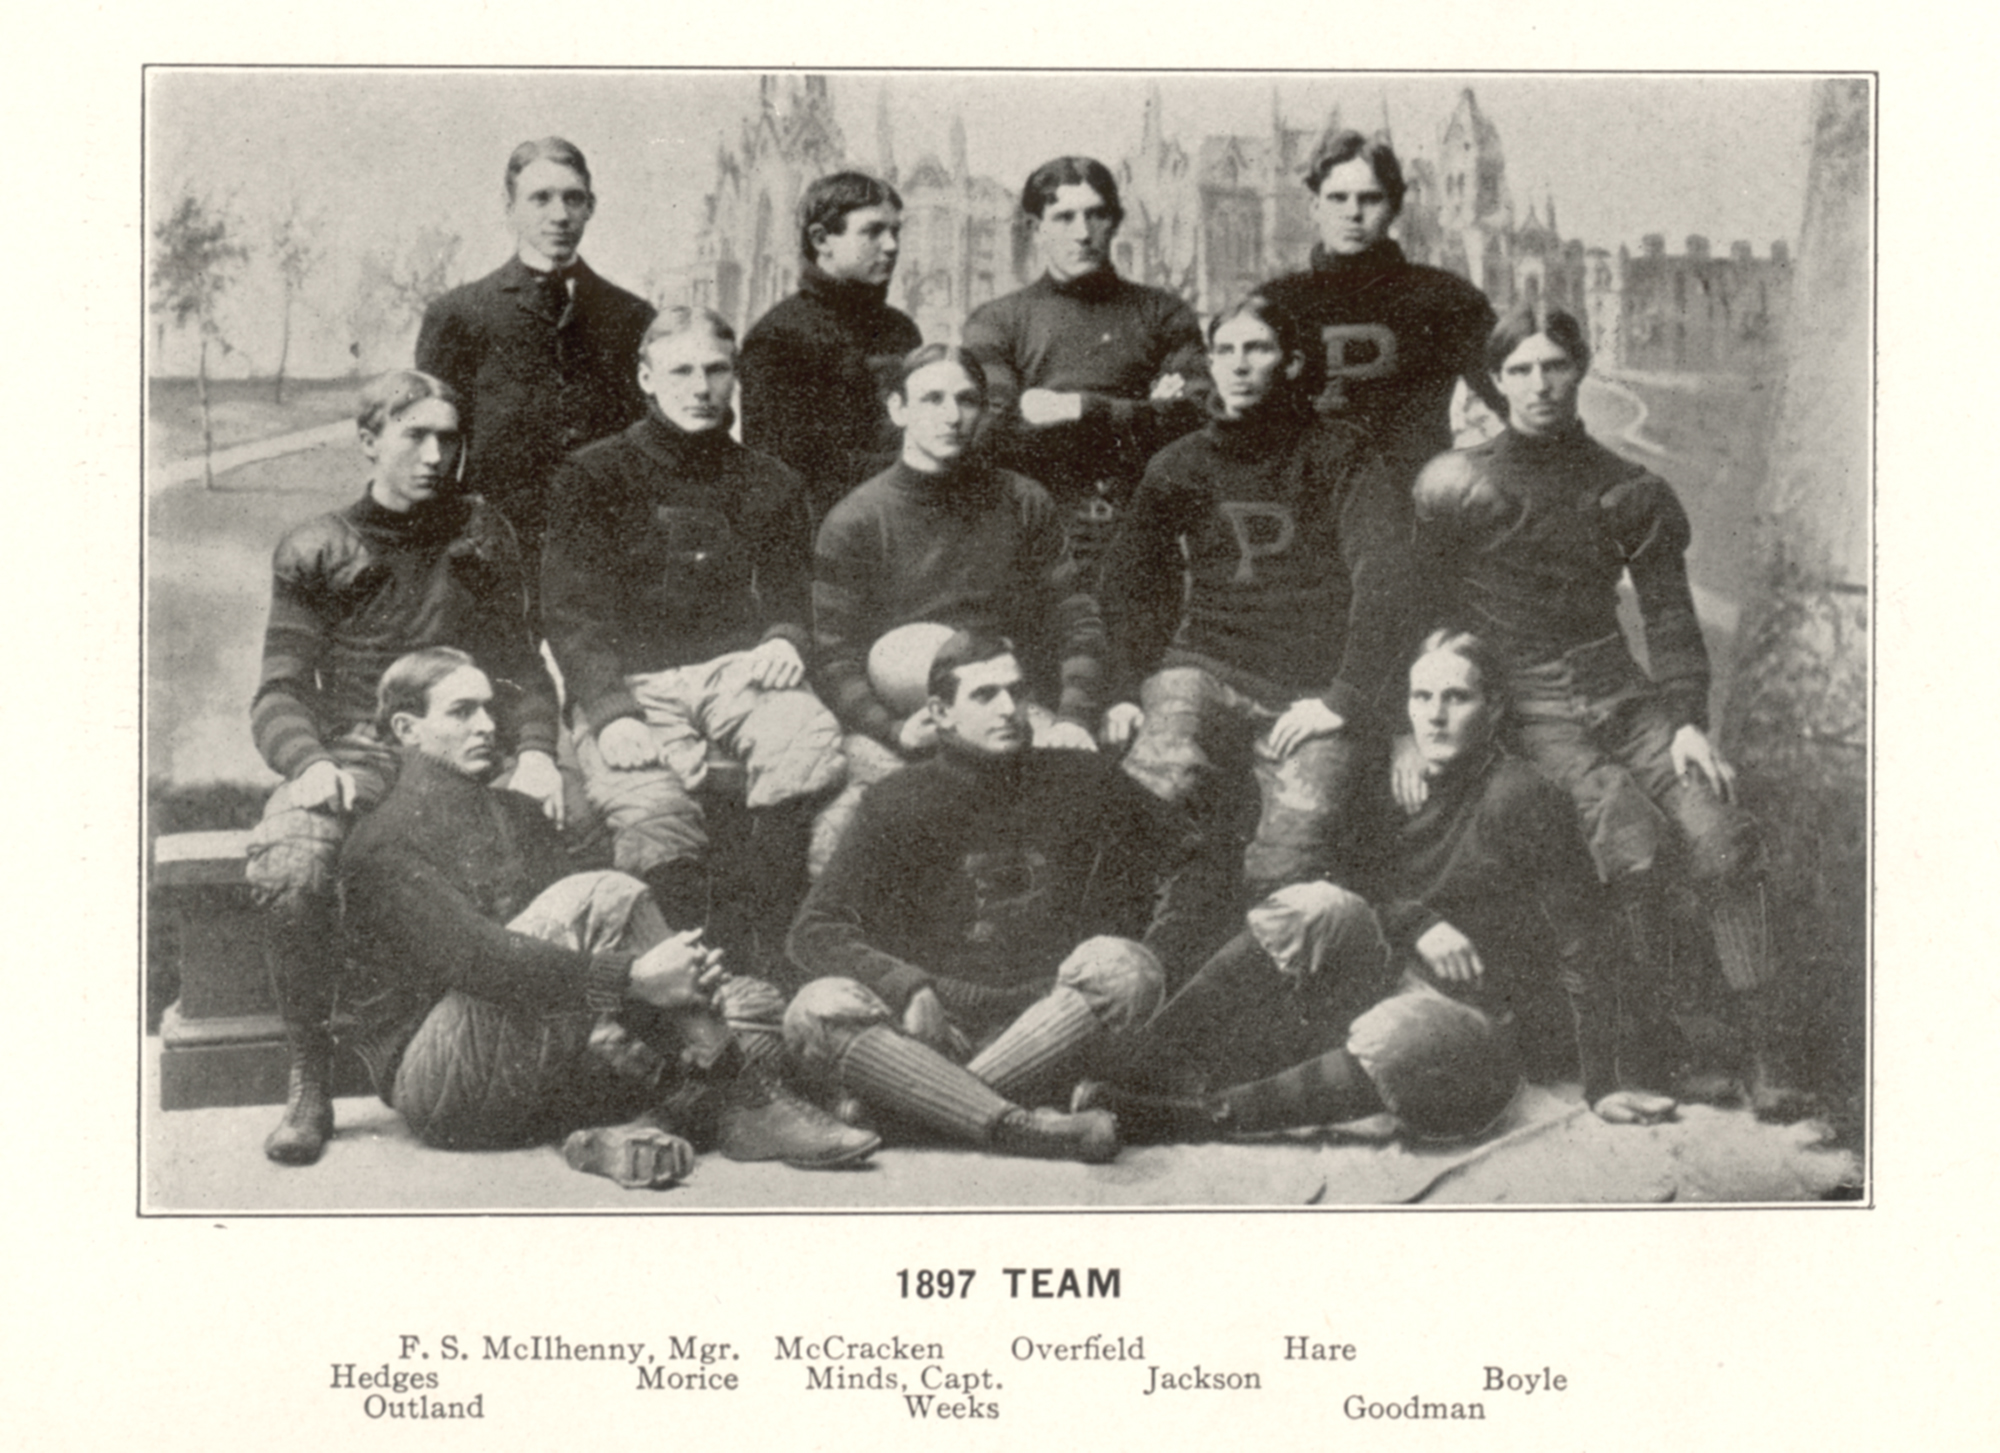 Members of Penn's 1897 national champion football team